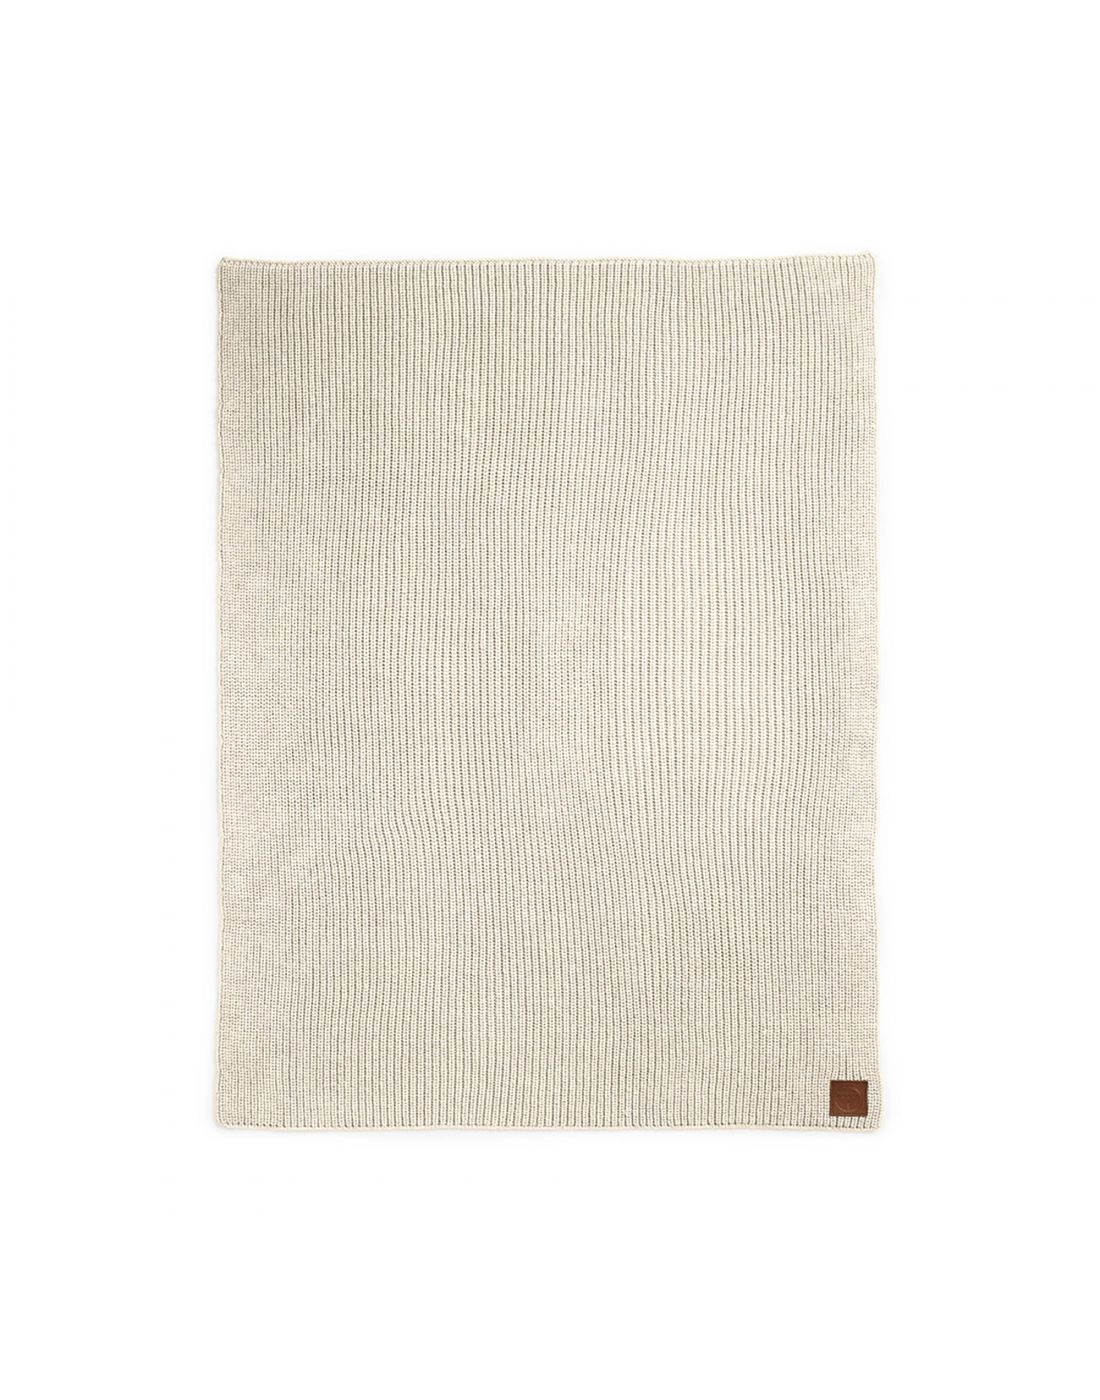 Elodie Wool Knitted Blanket Vanilla White
